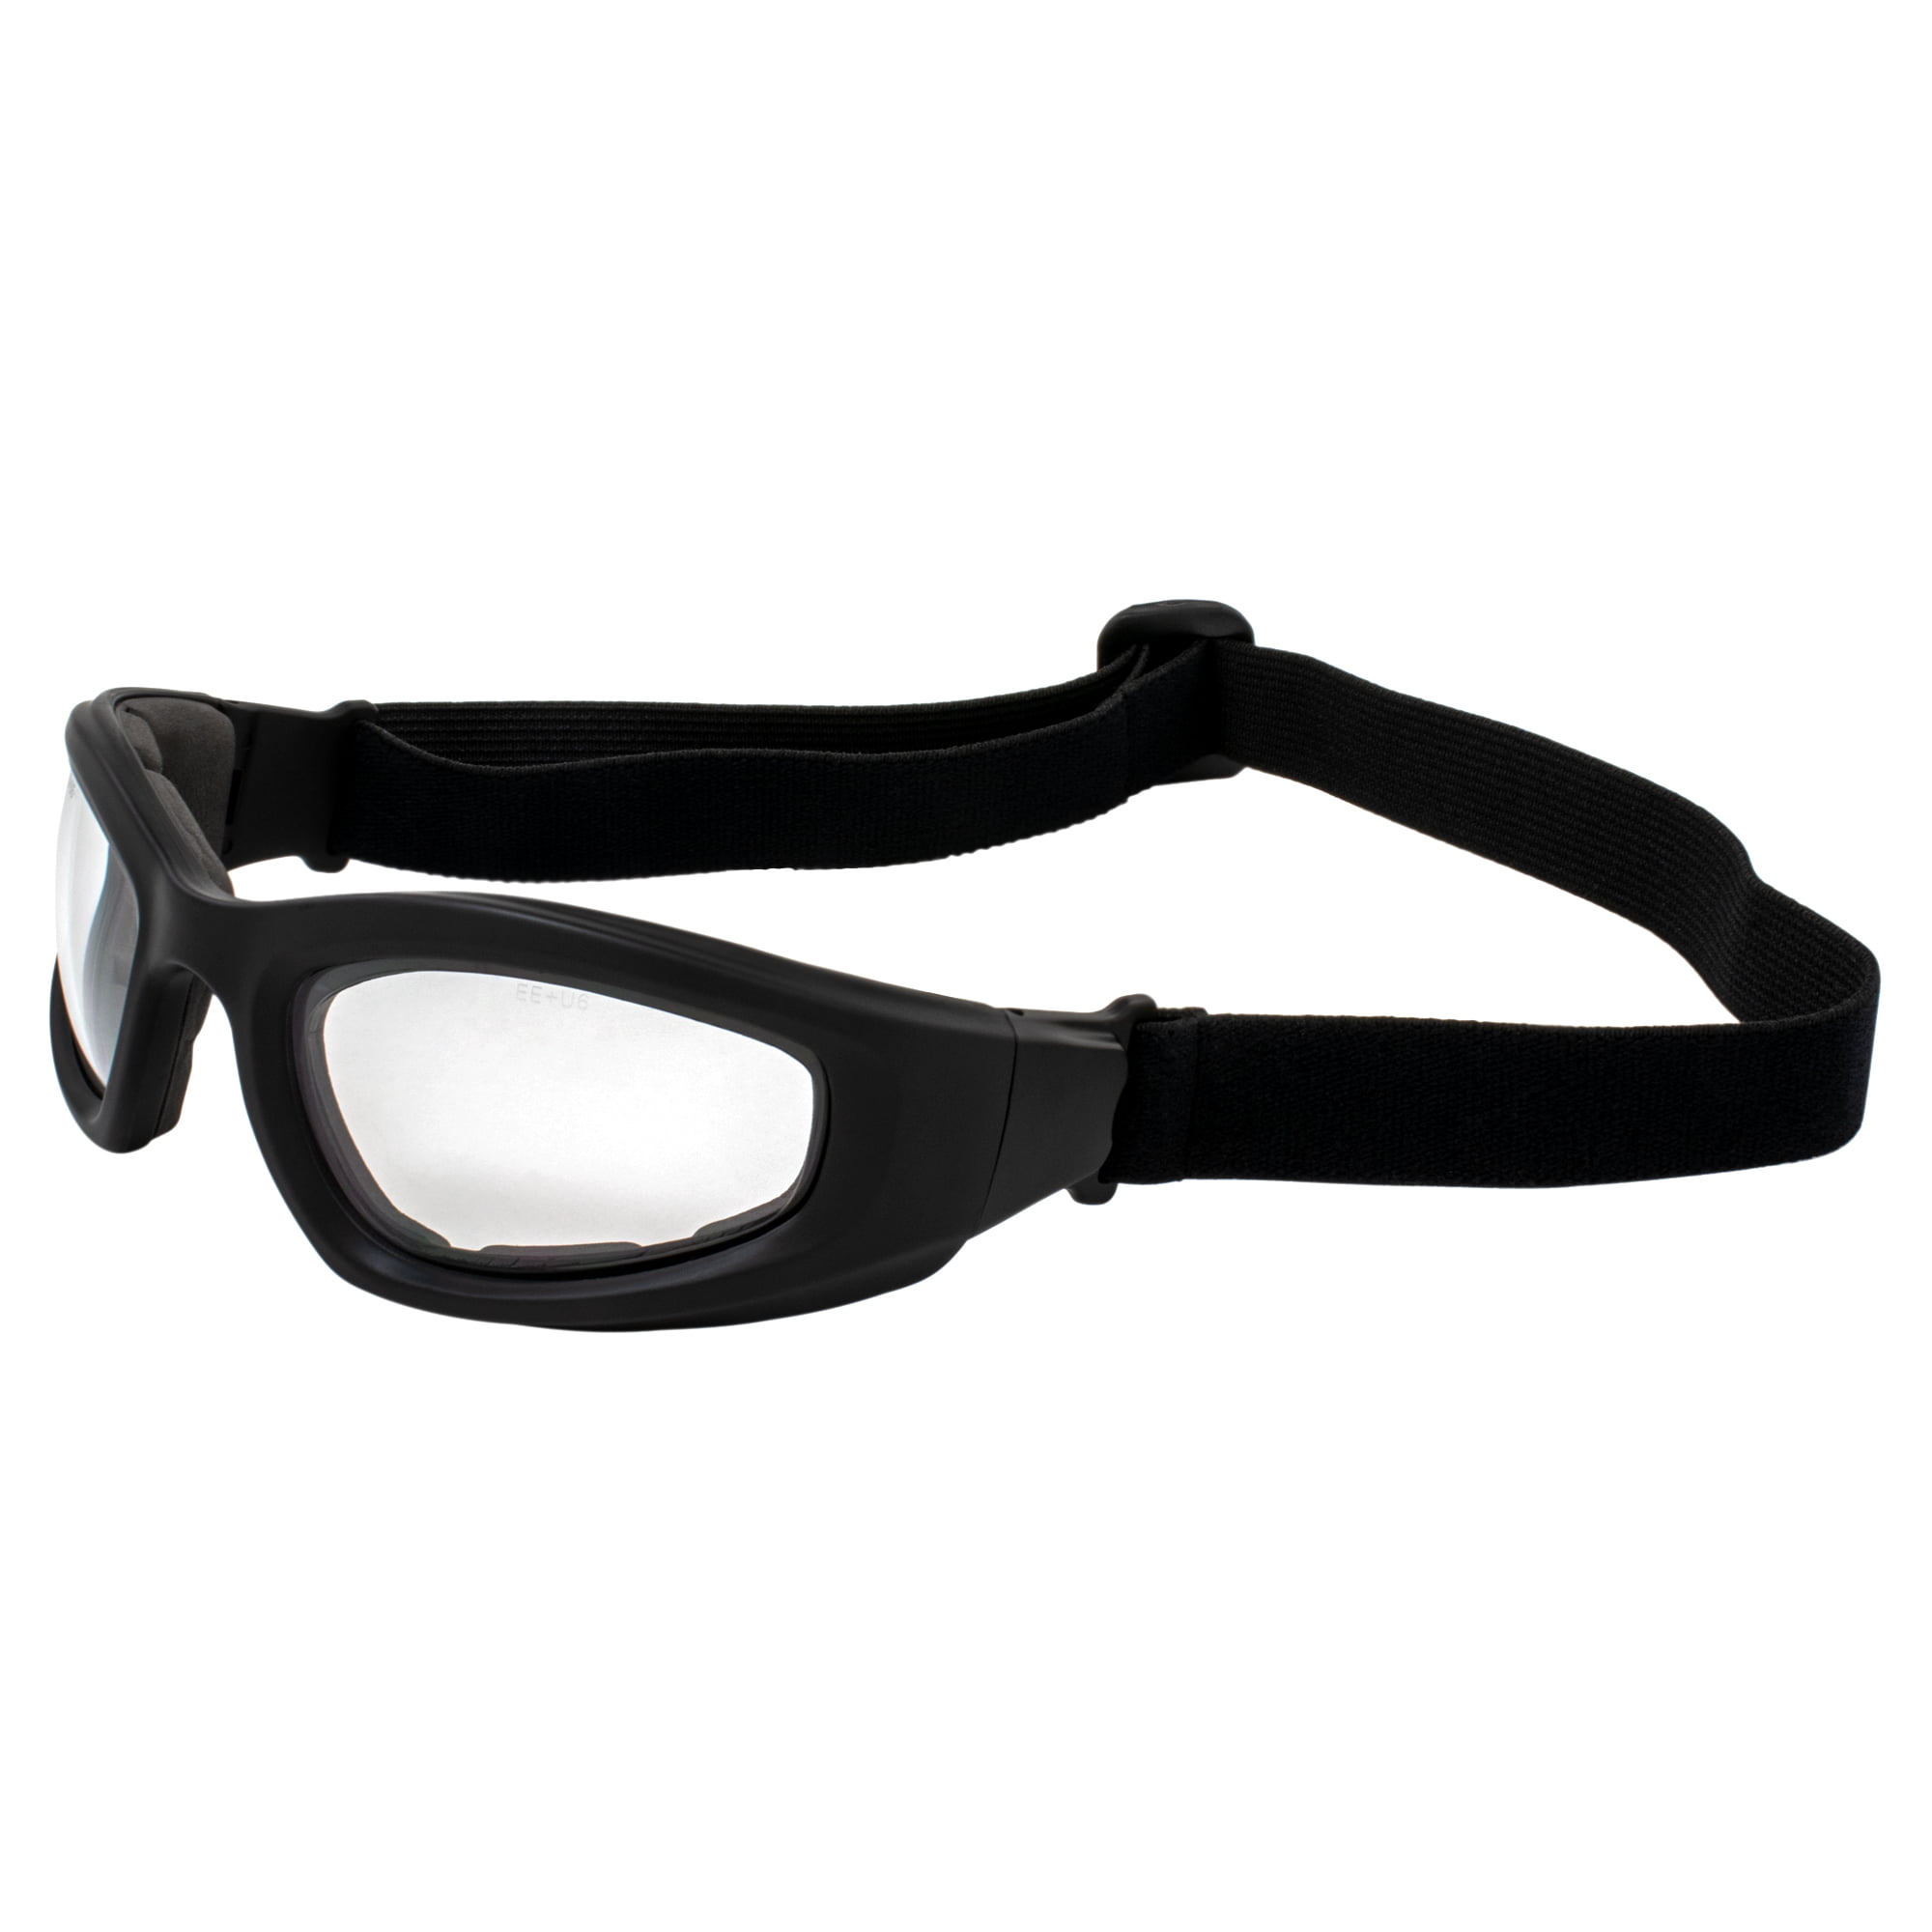 EPOCH Eyewear Folding Motorcycle Goggles Black Frame Clear Lens Adjustable Strap 